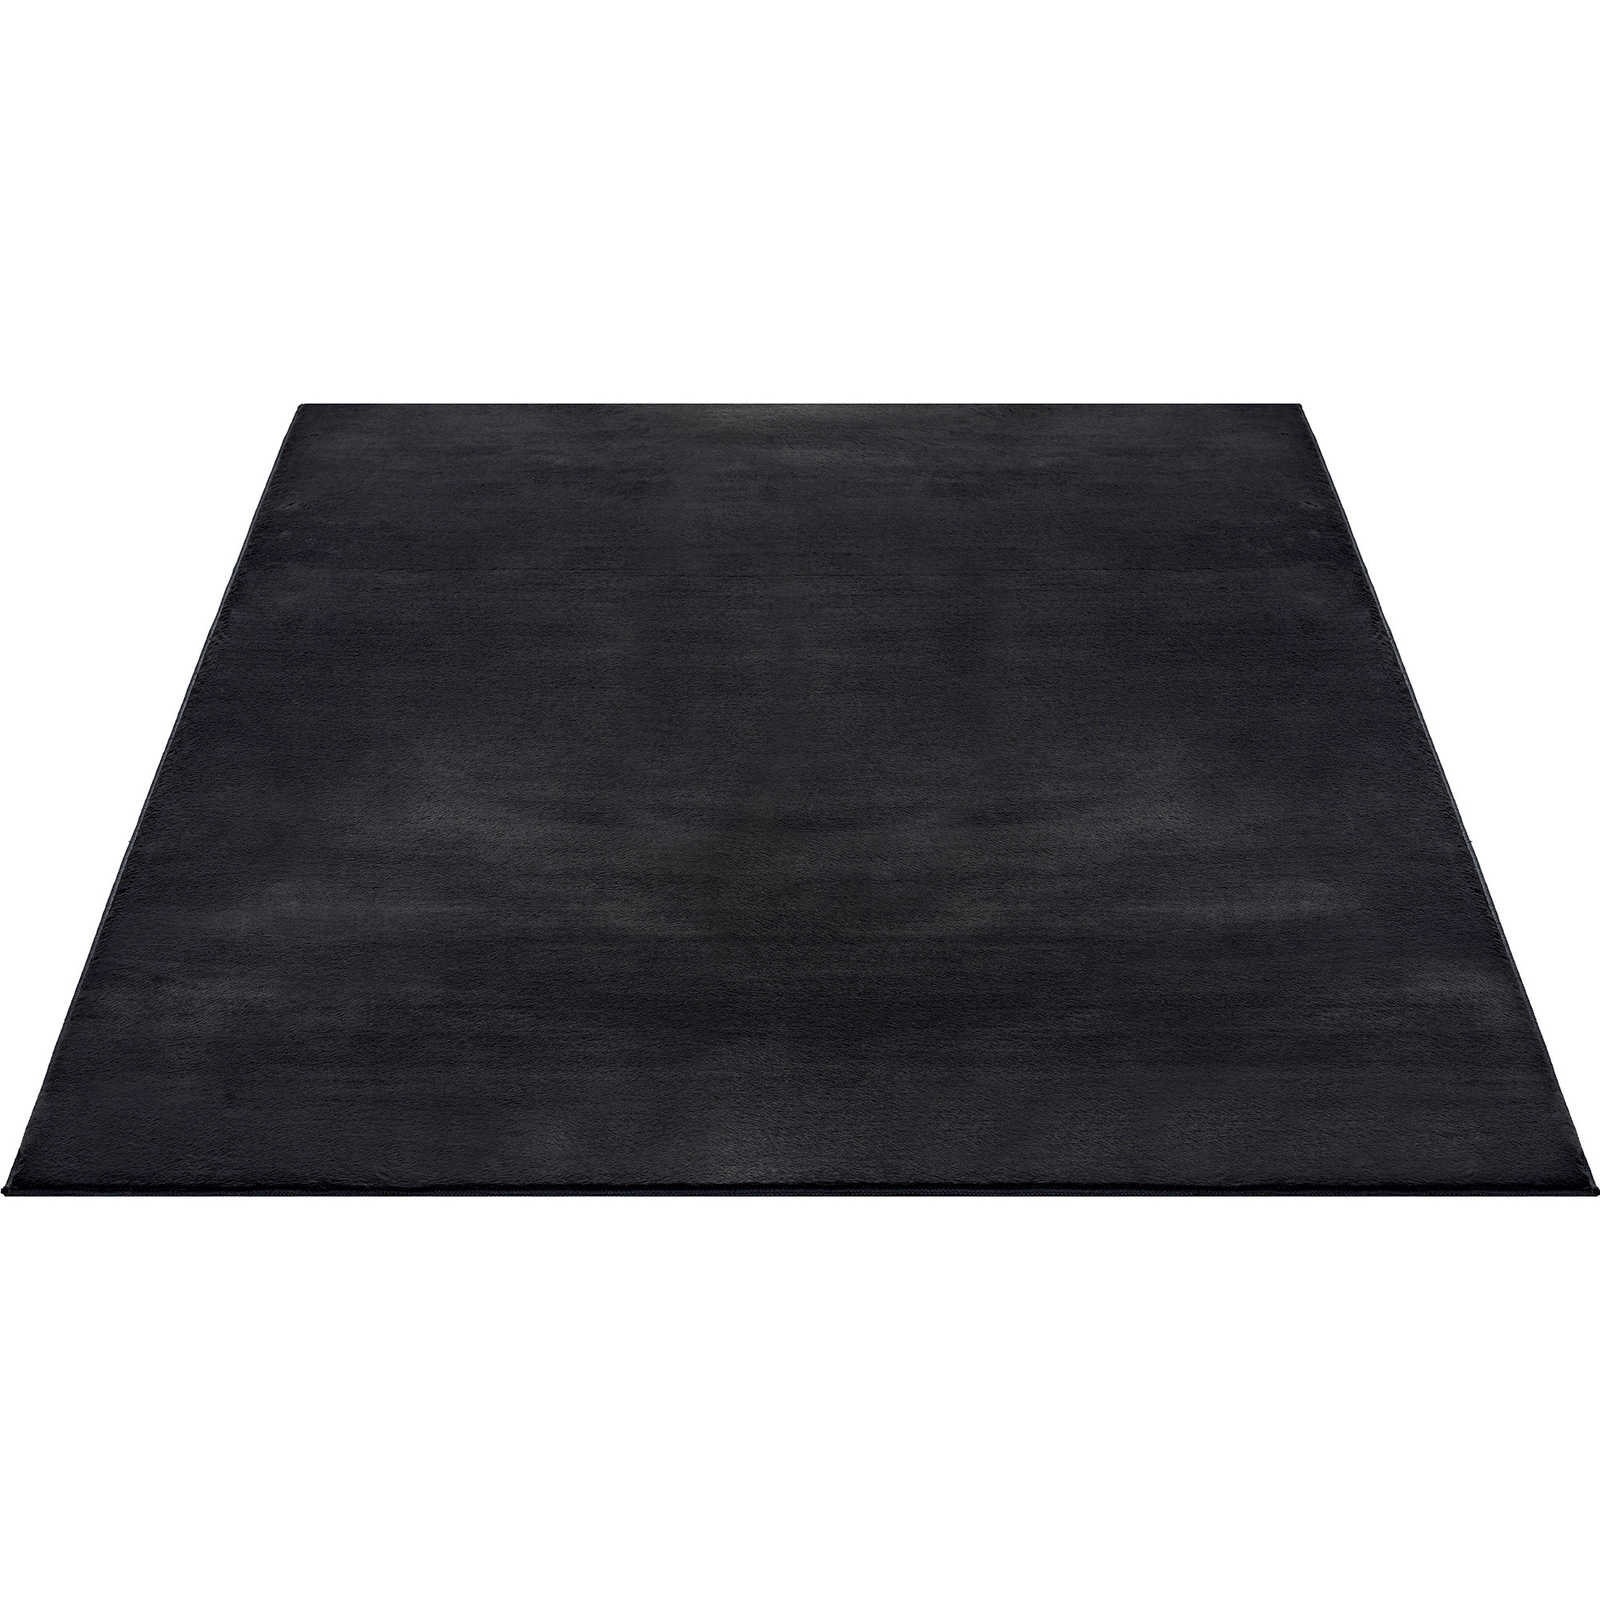 Cuddly soft high pile carpet in black - 340 x 240 cm
